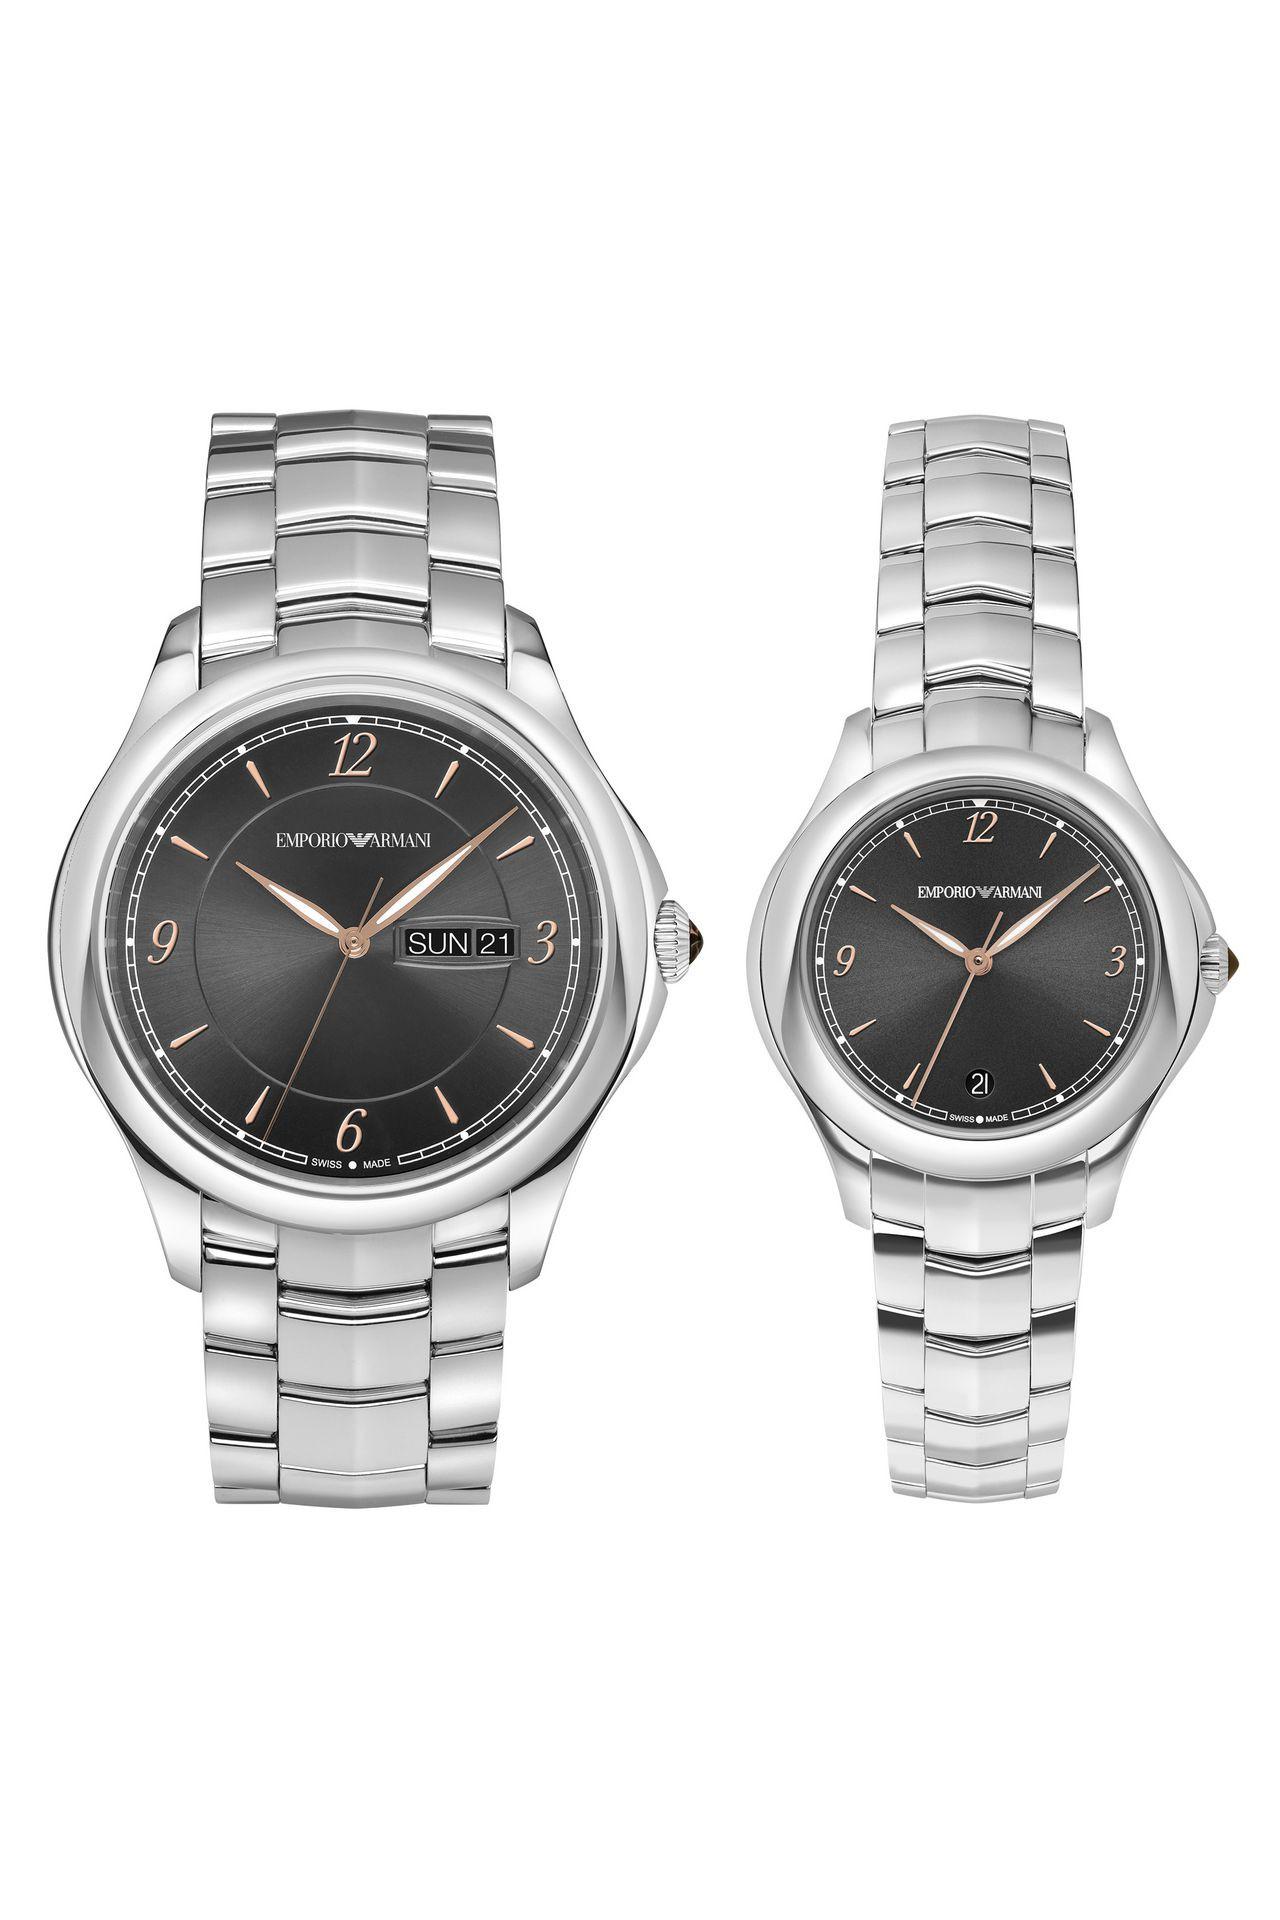 Emporio Armani Swiss Watch Gift Set 